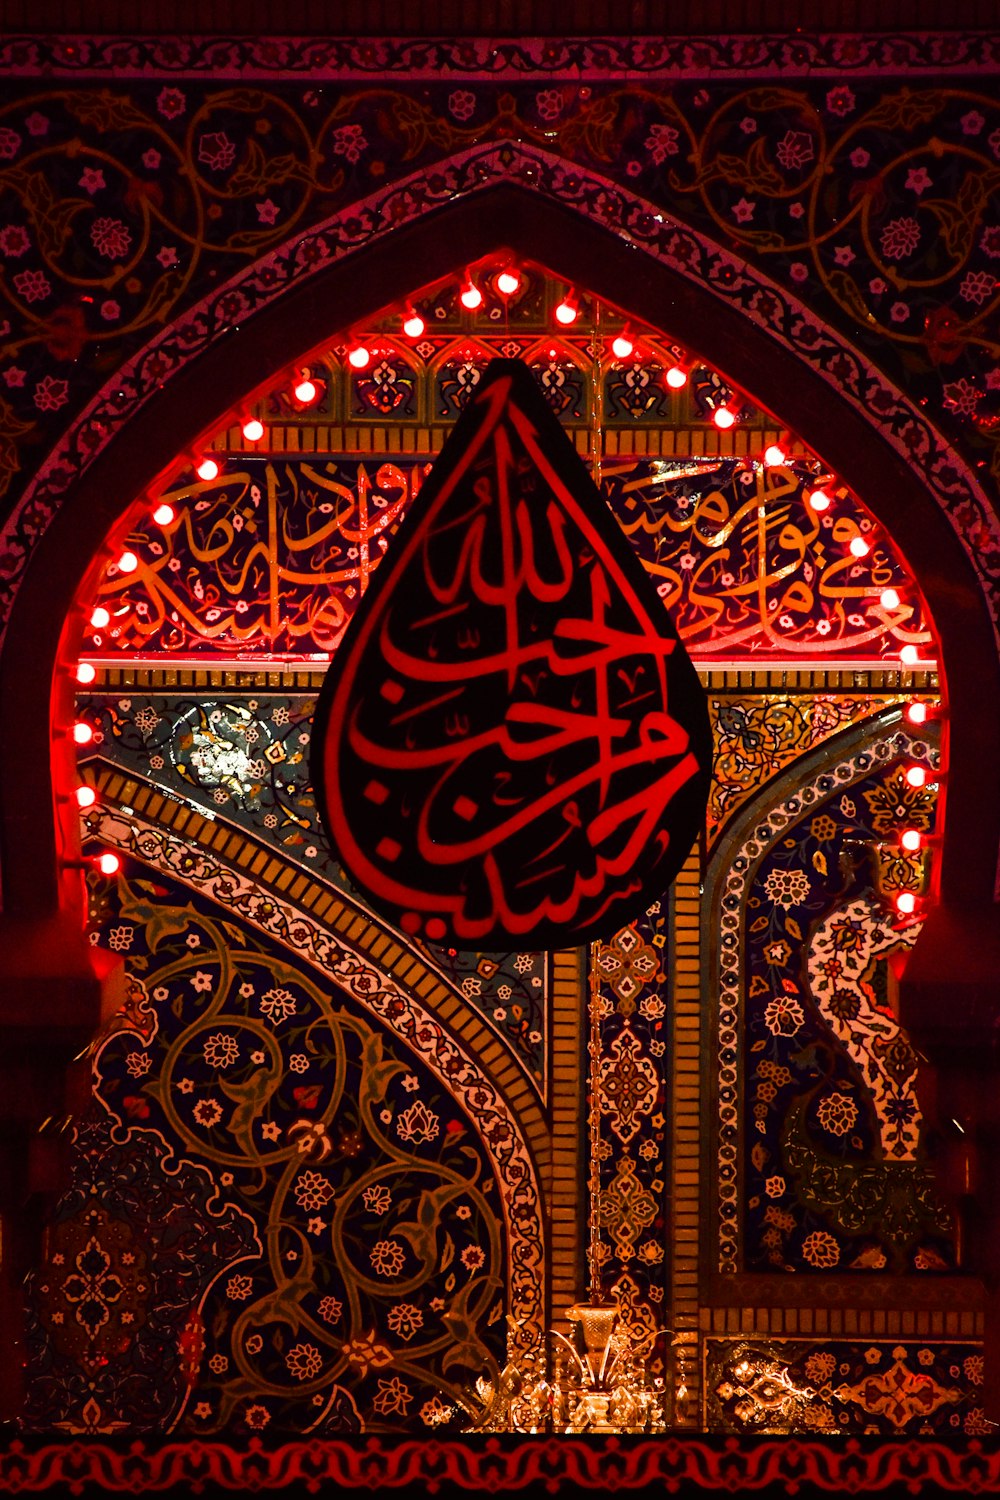 Arte da Caligrafia de Allah